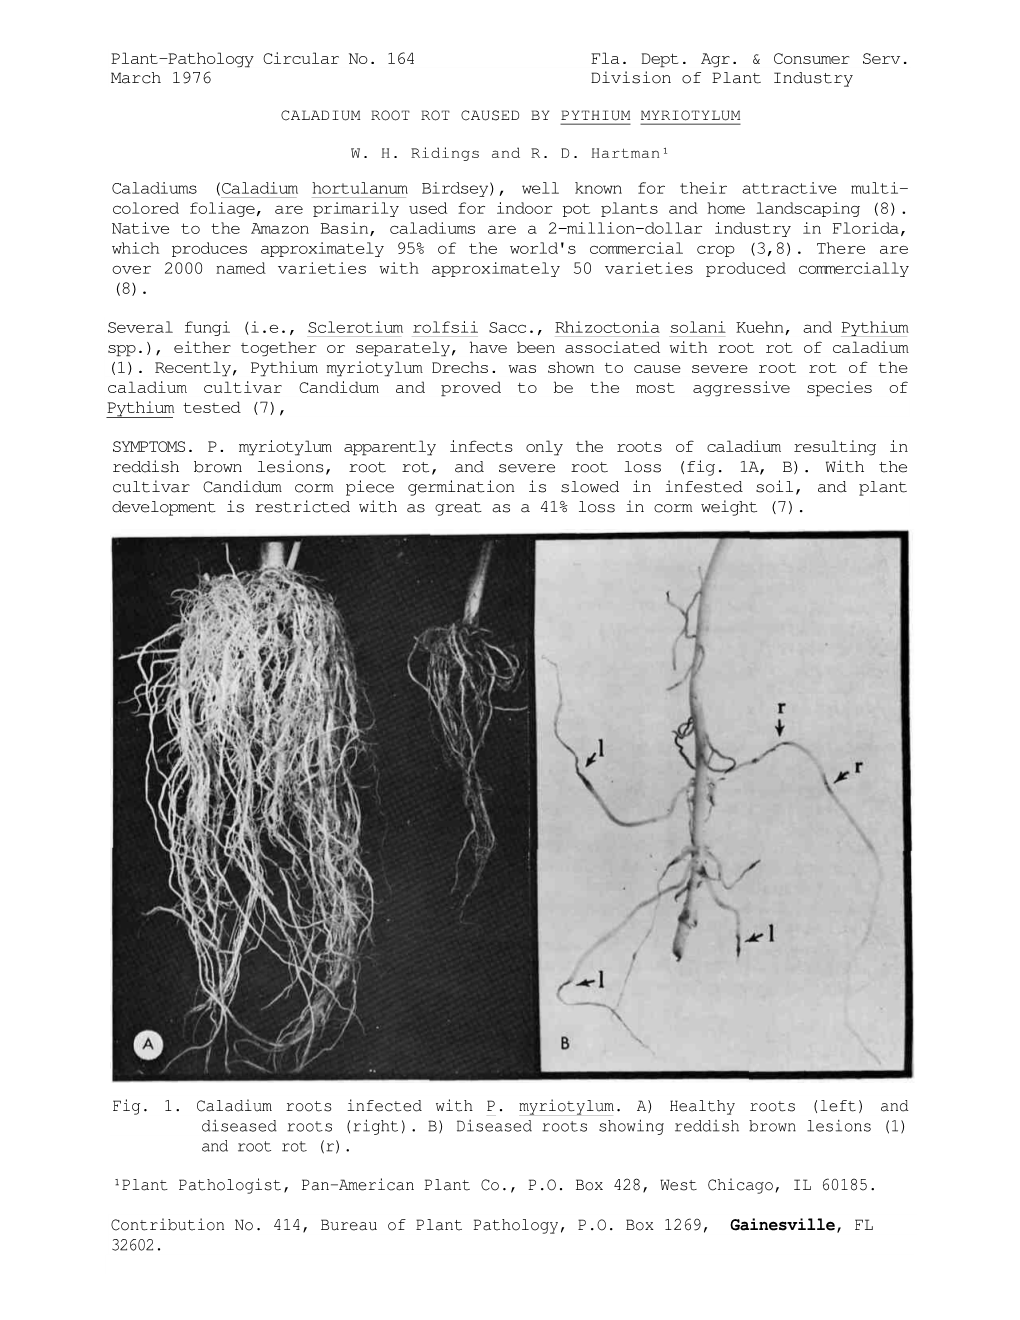 Caladium Root Rot Caused by Pythium Myriotylum